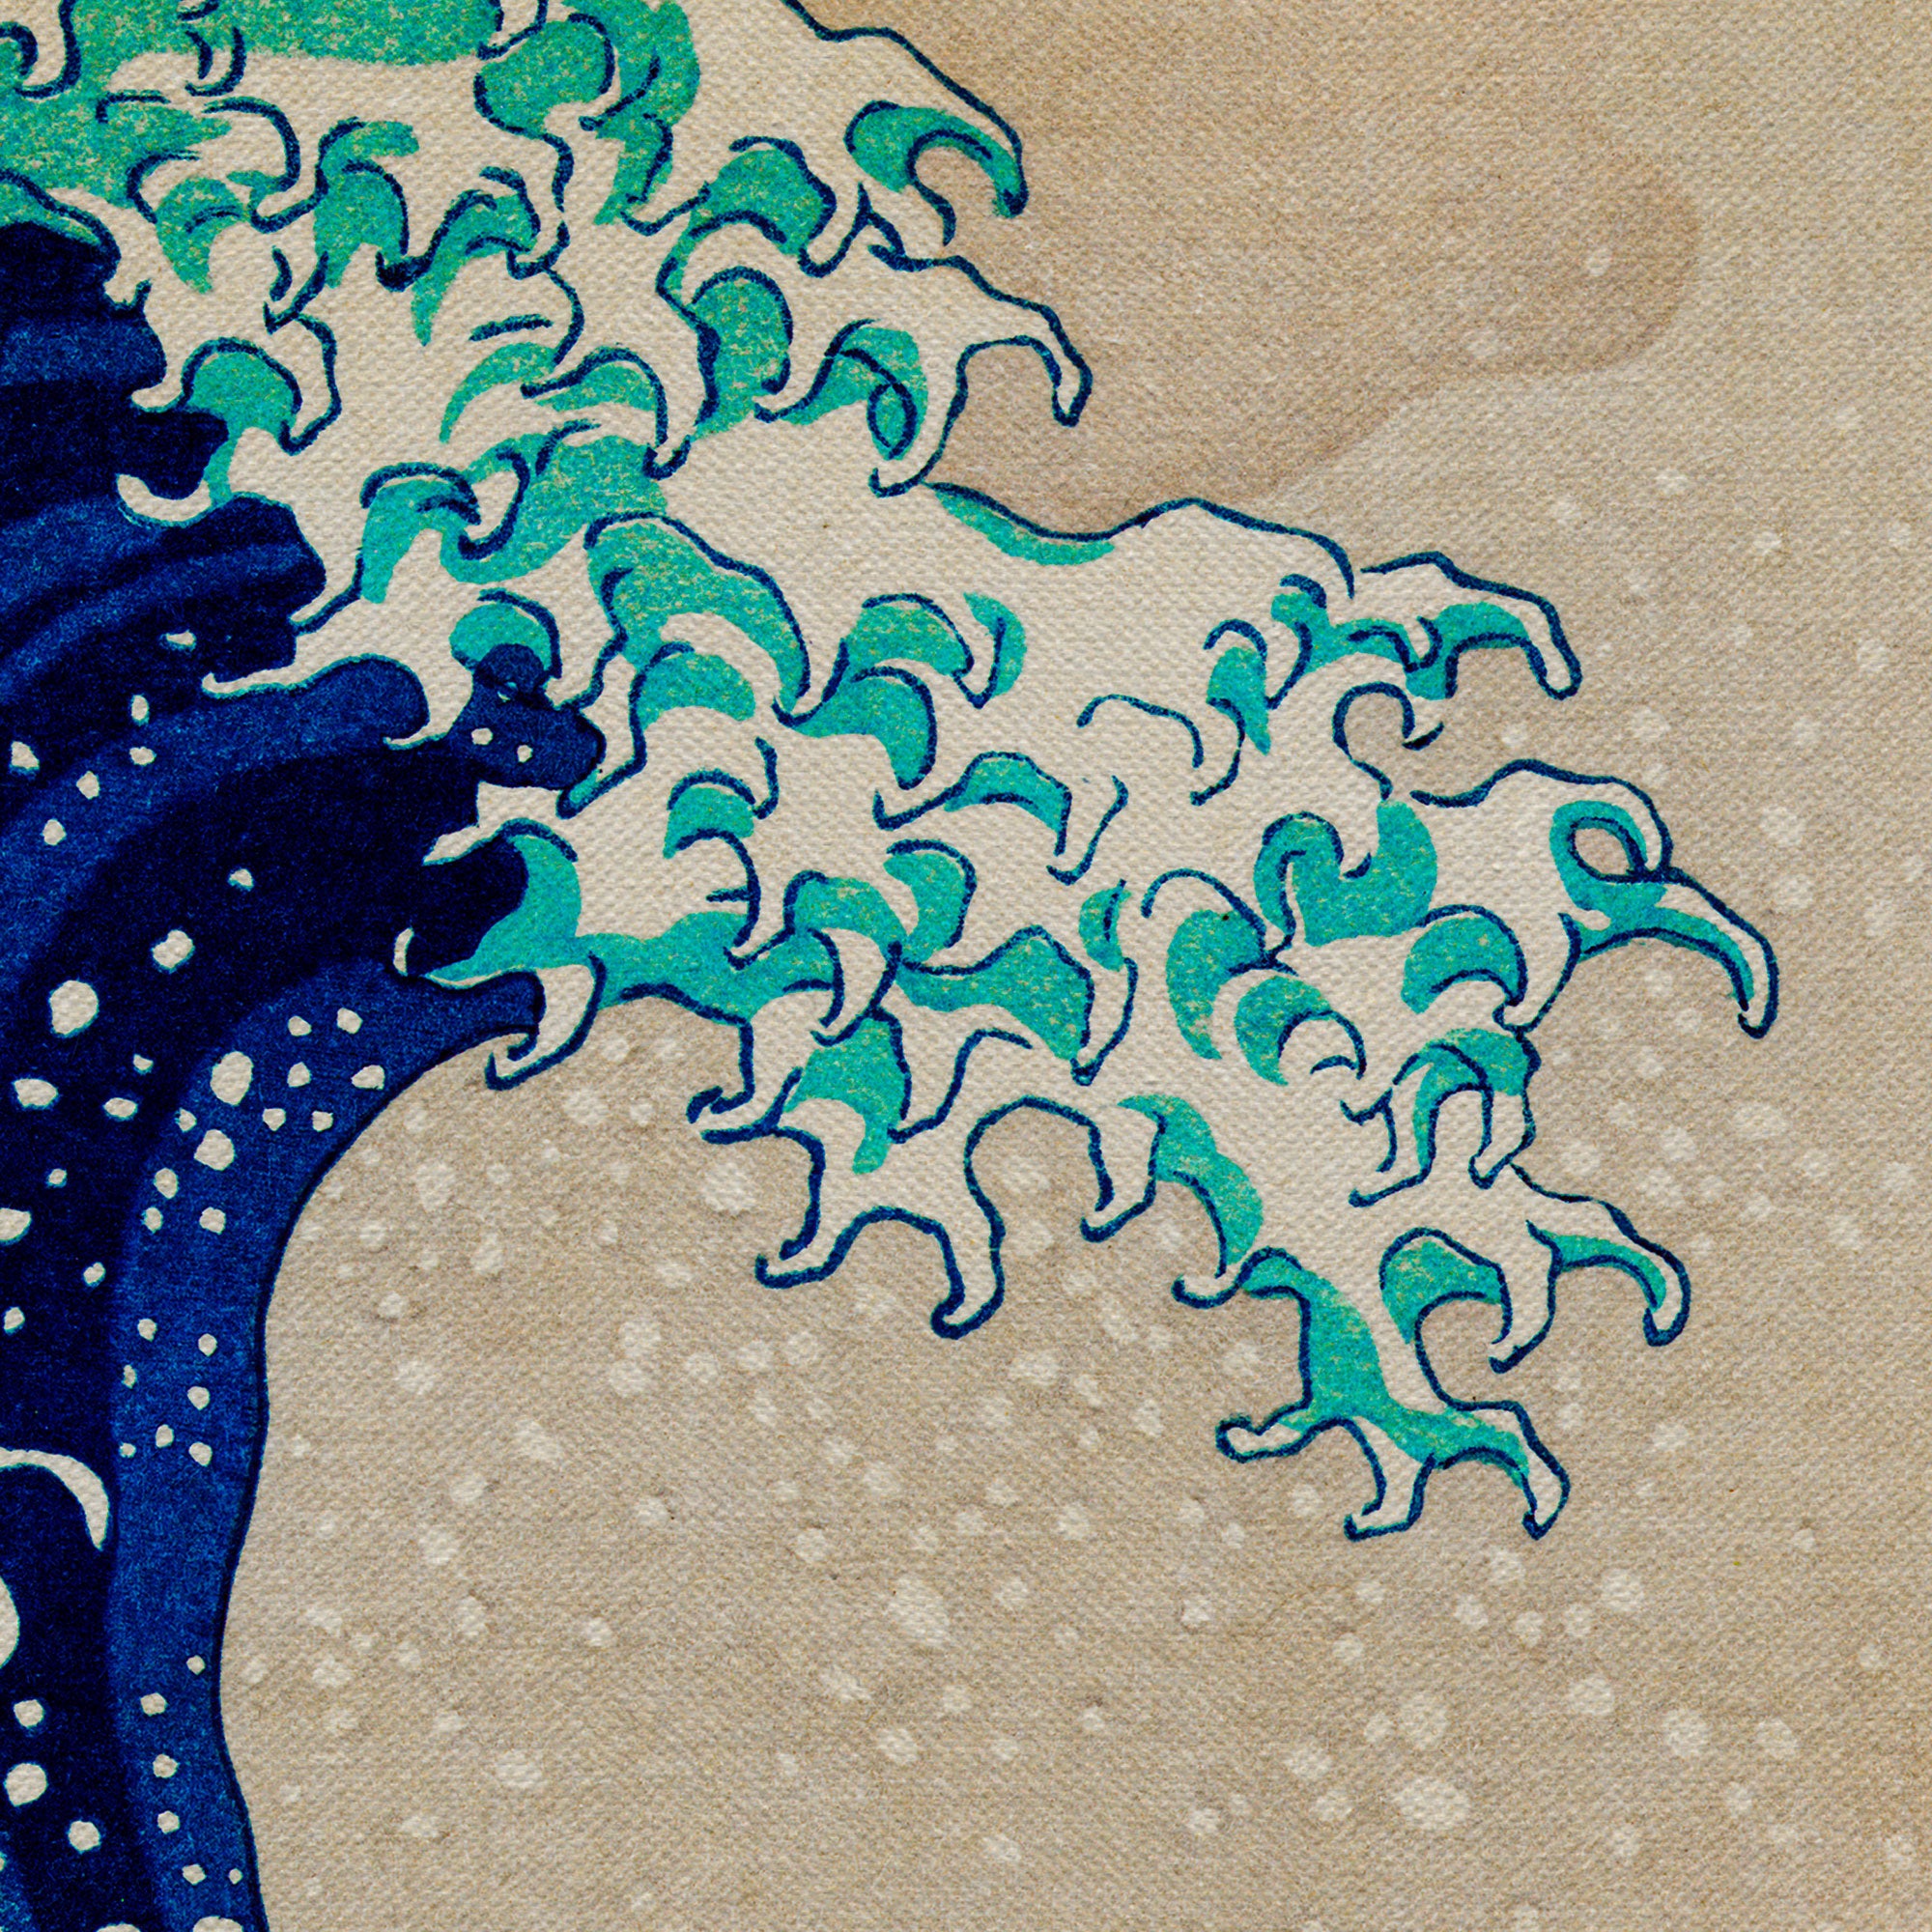 Katsushika Hokusai The Great Wave Off Kanagawa Canvas Wall Art